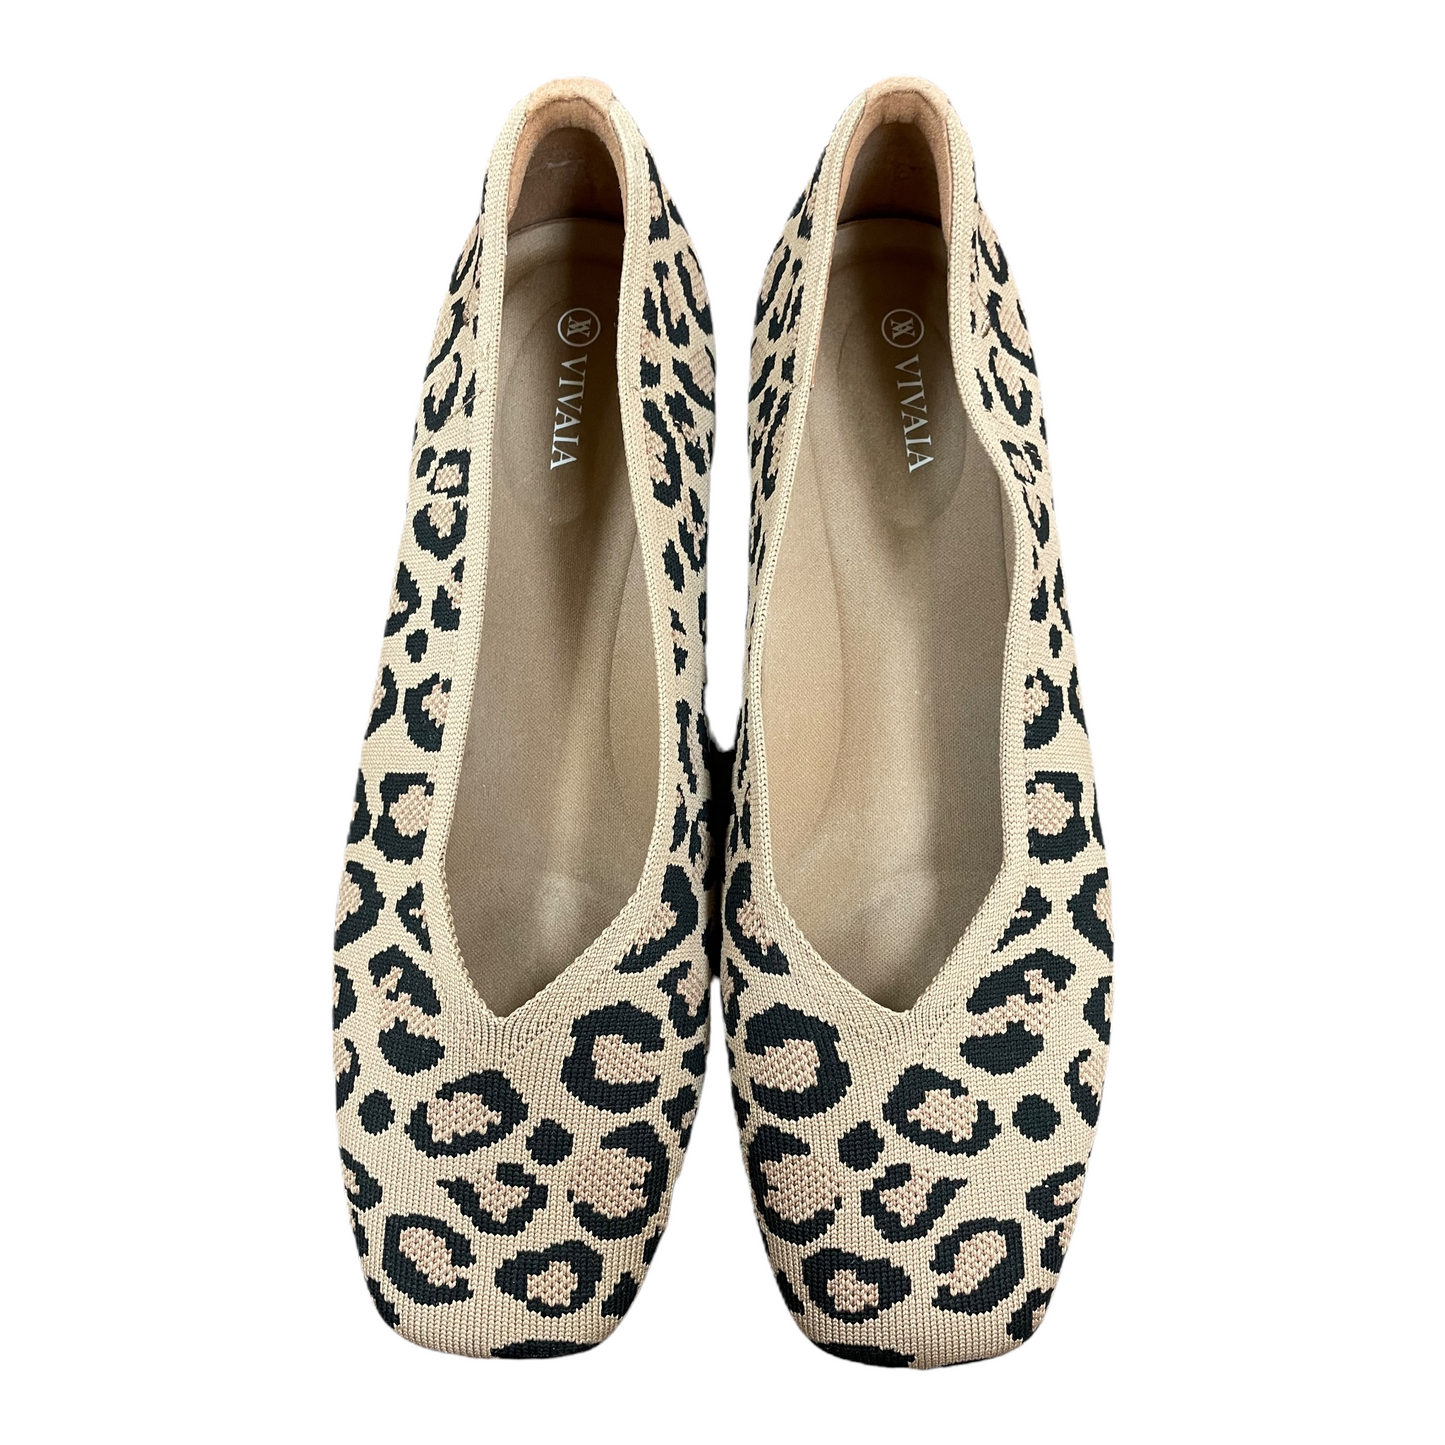 Animal Print Shoes Flats By Vivaia Size: 11